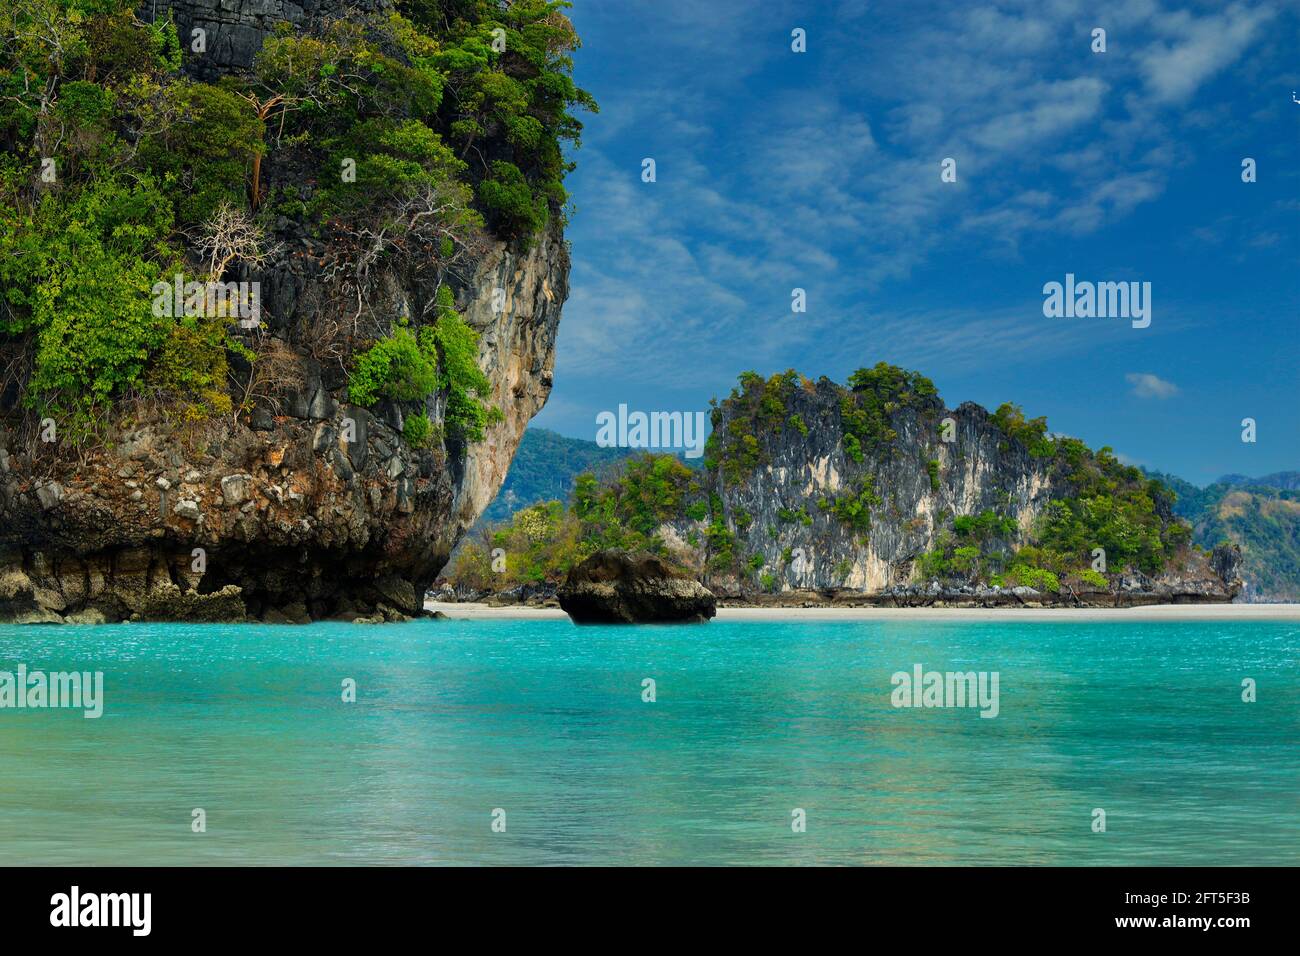 view of limestone island  in adamant sea in thailand Stock Photo